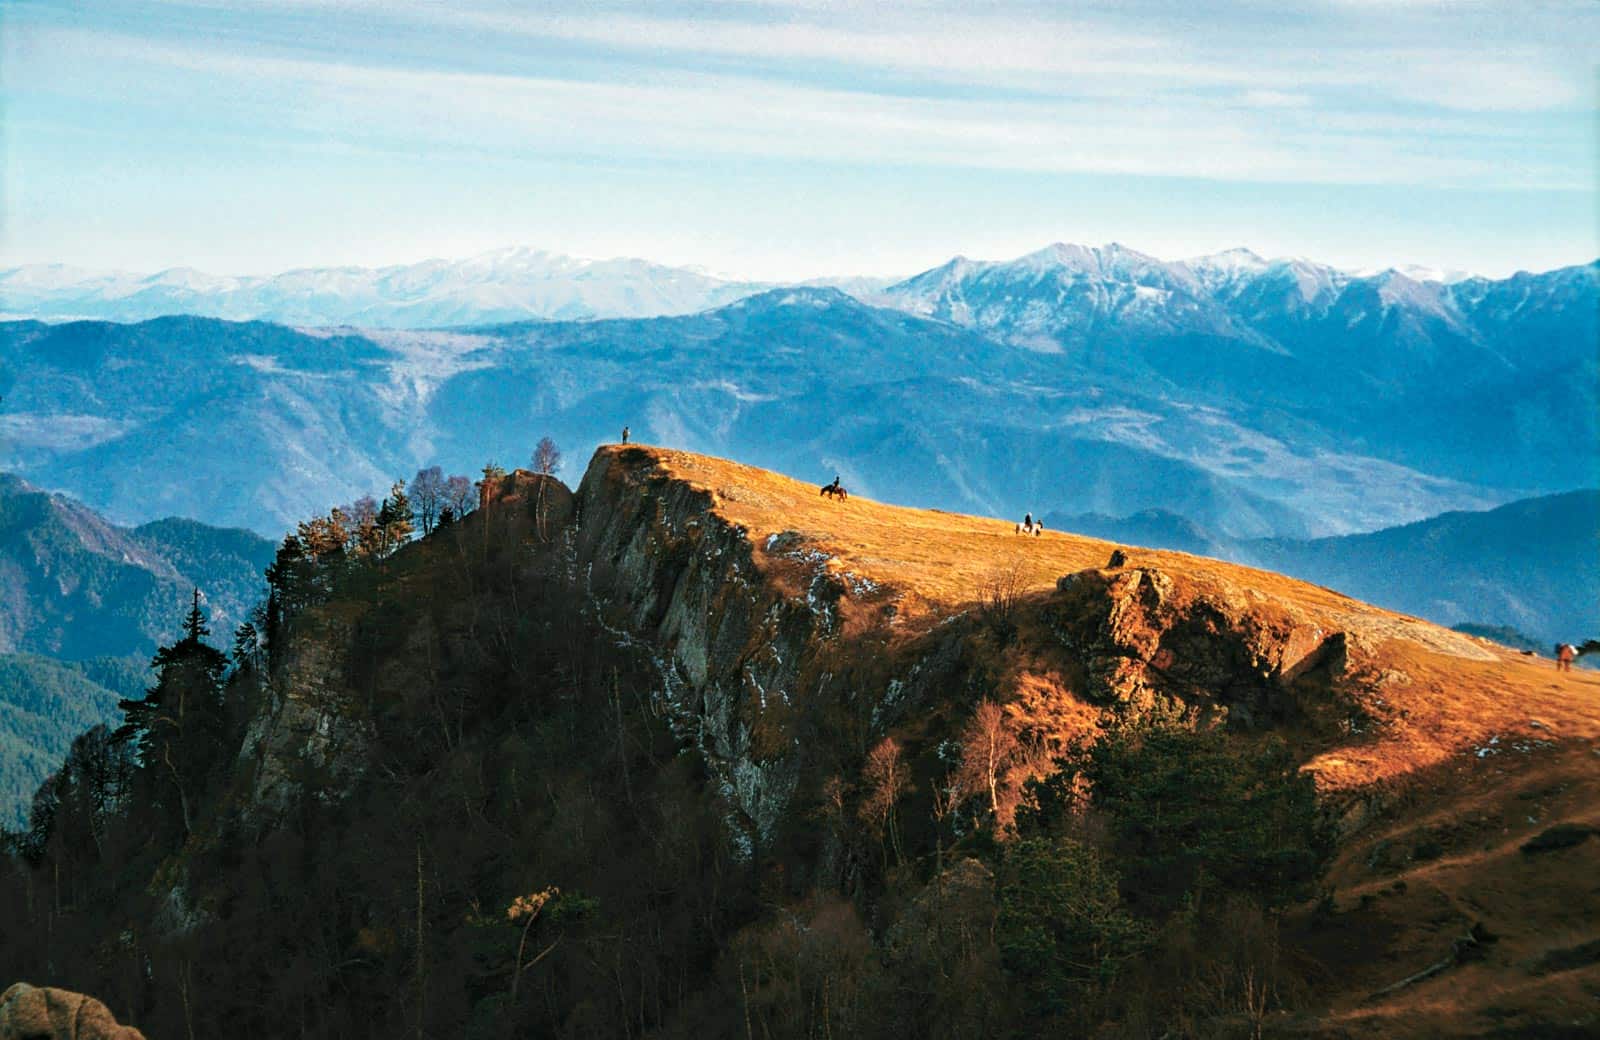 Borjormi-Kharagauli Wilderness